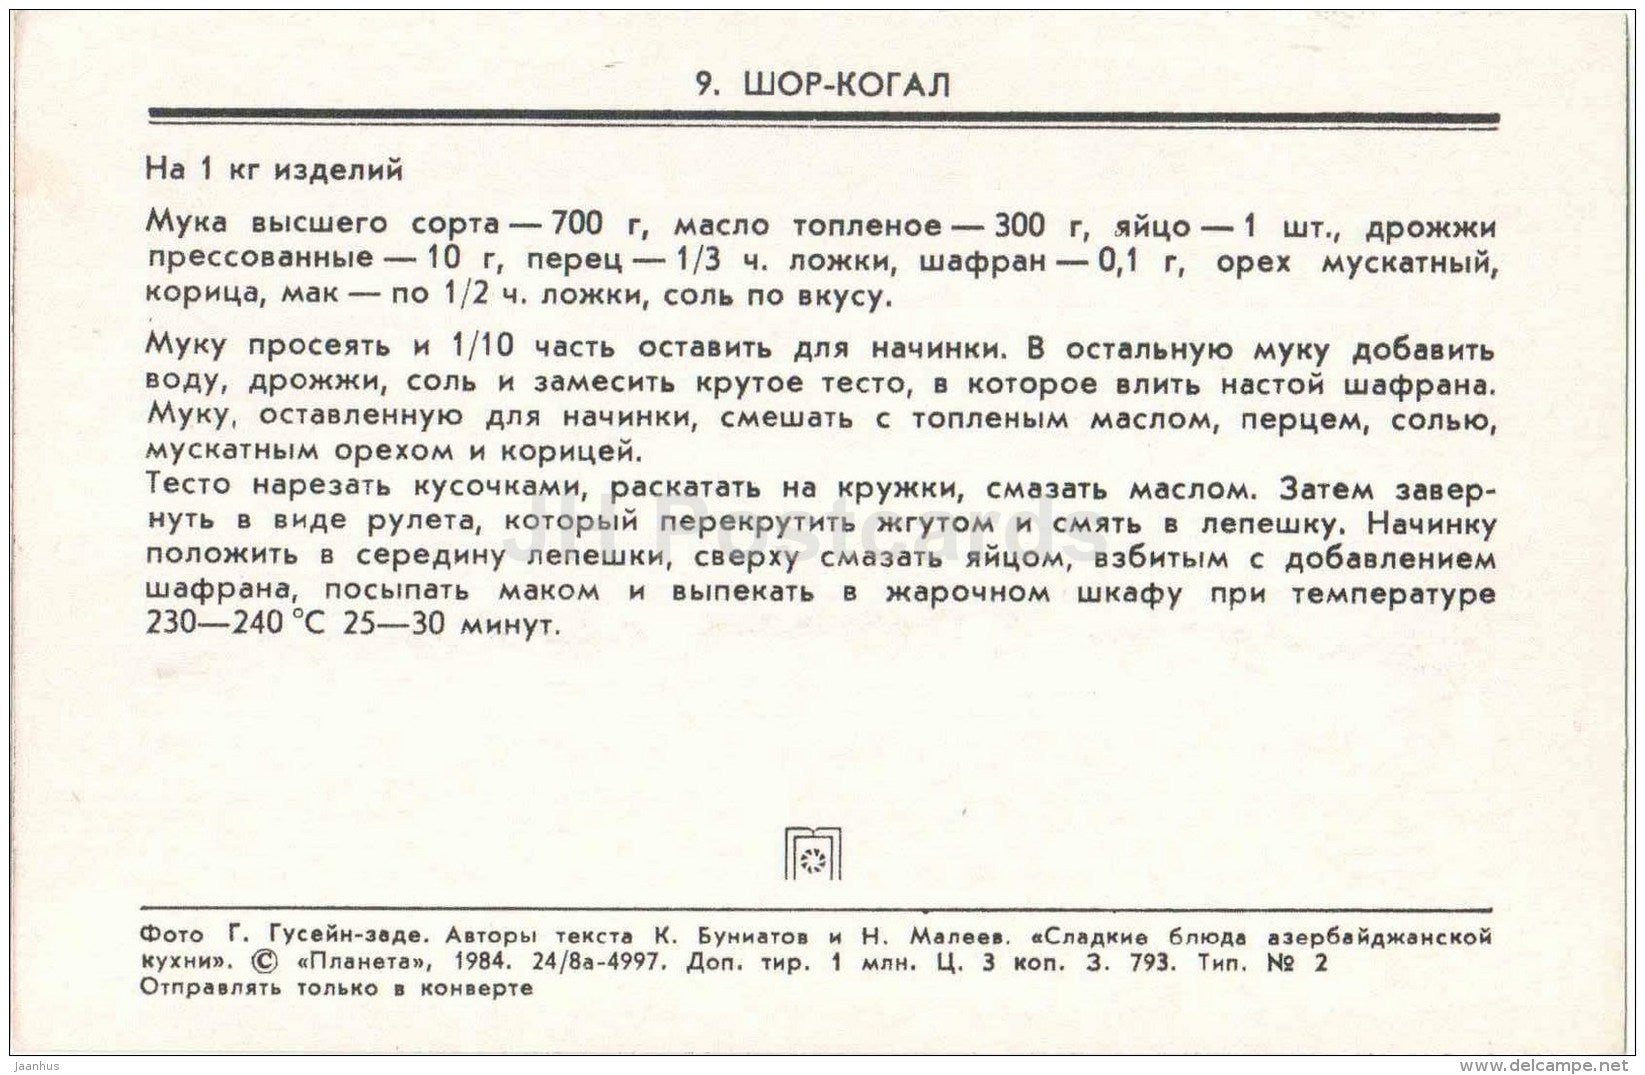 Shor-Gogal - non-sweet multilayered bun - dishes - Azerbaijan dessert - cuisine - 1984 - Russia USSR - unused - JH Postcards